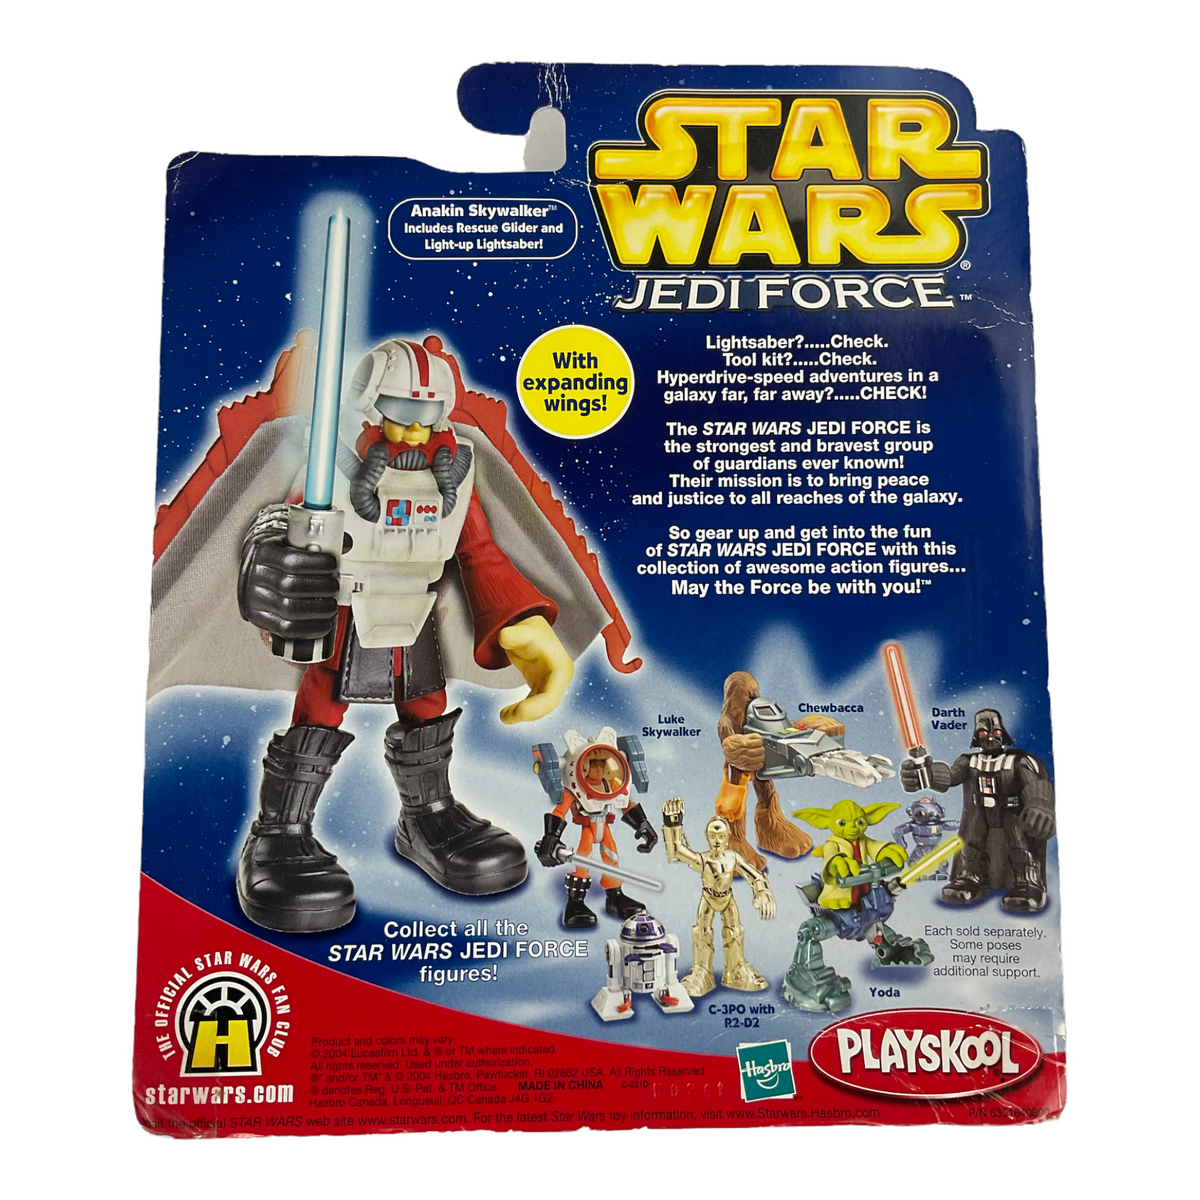 Star Wars Jedi Force Playskool Anakin Skywalker Figure w/ Rescue Glider